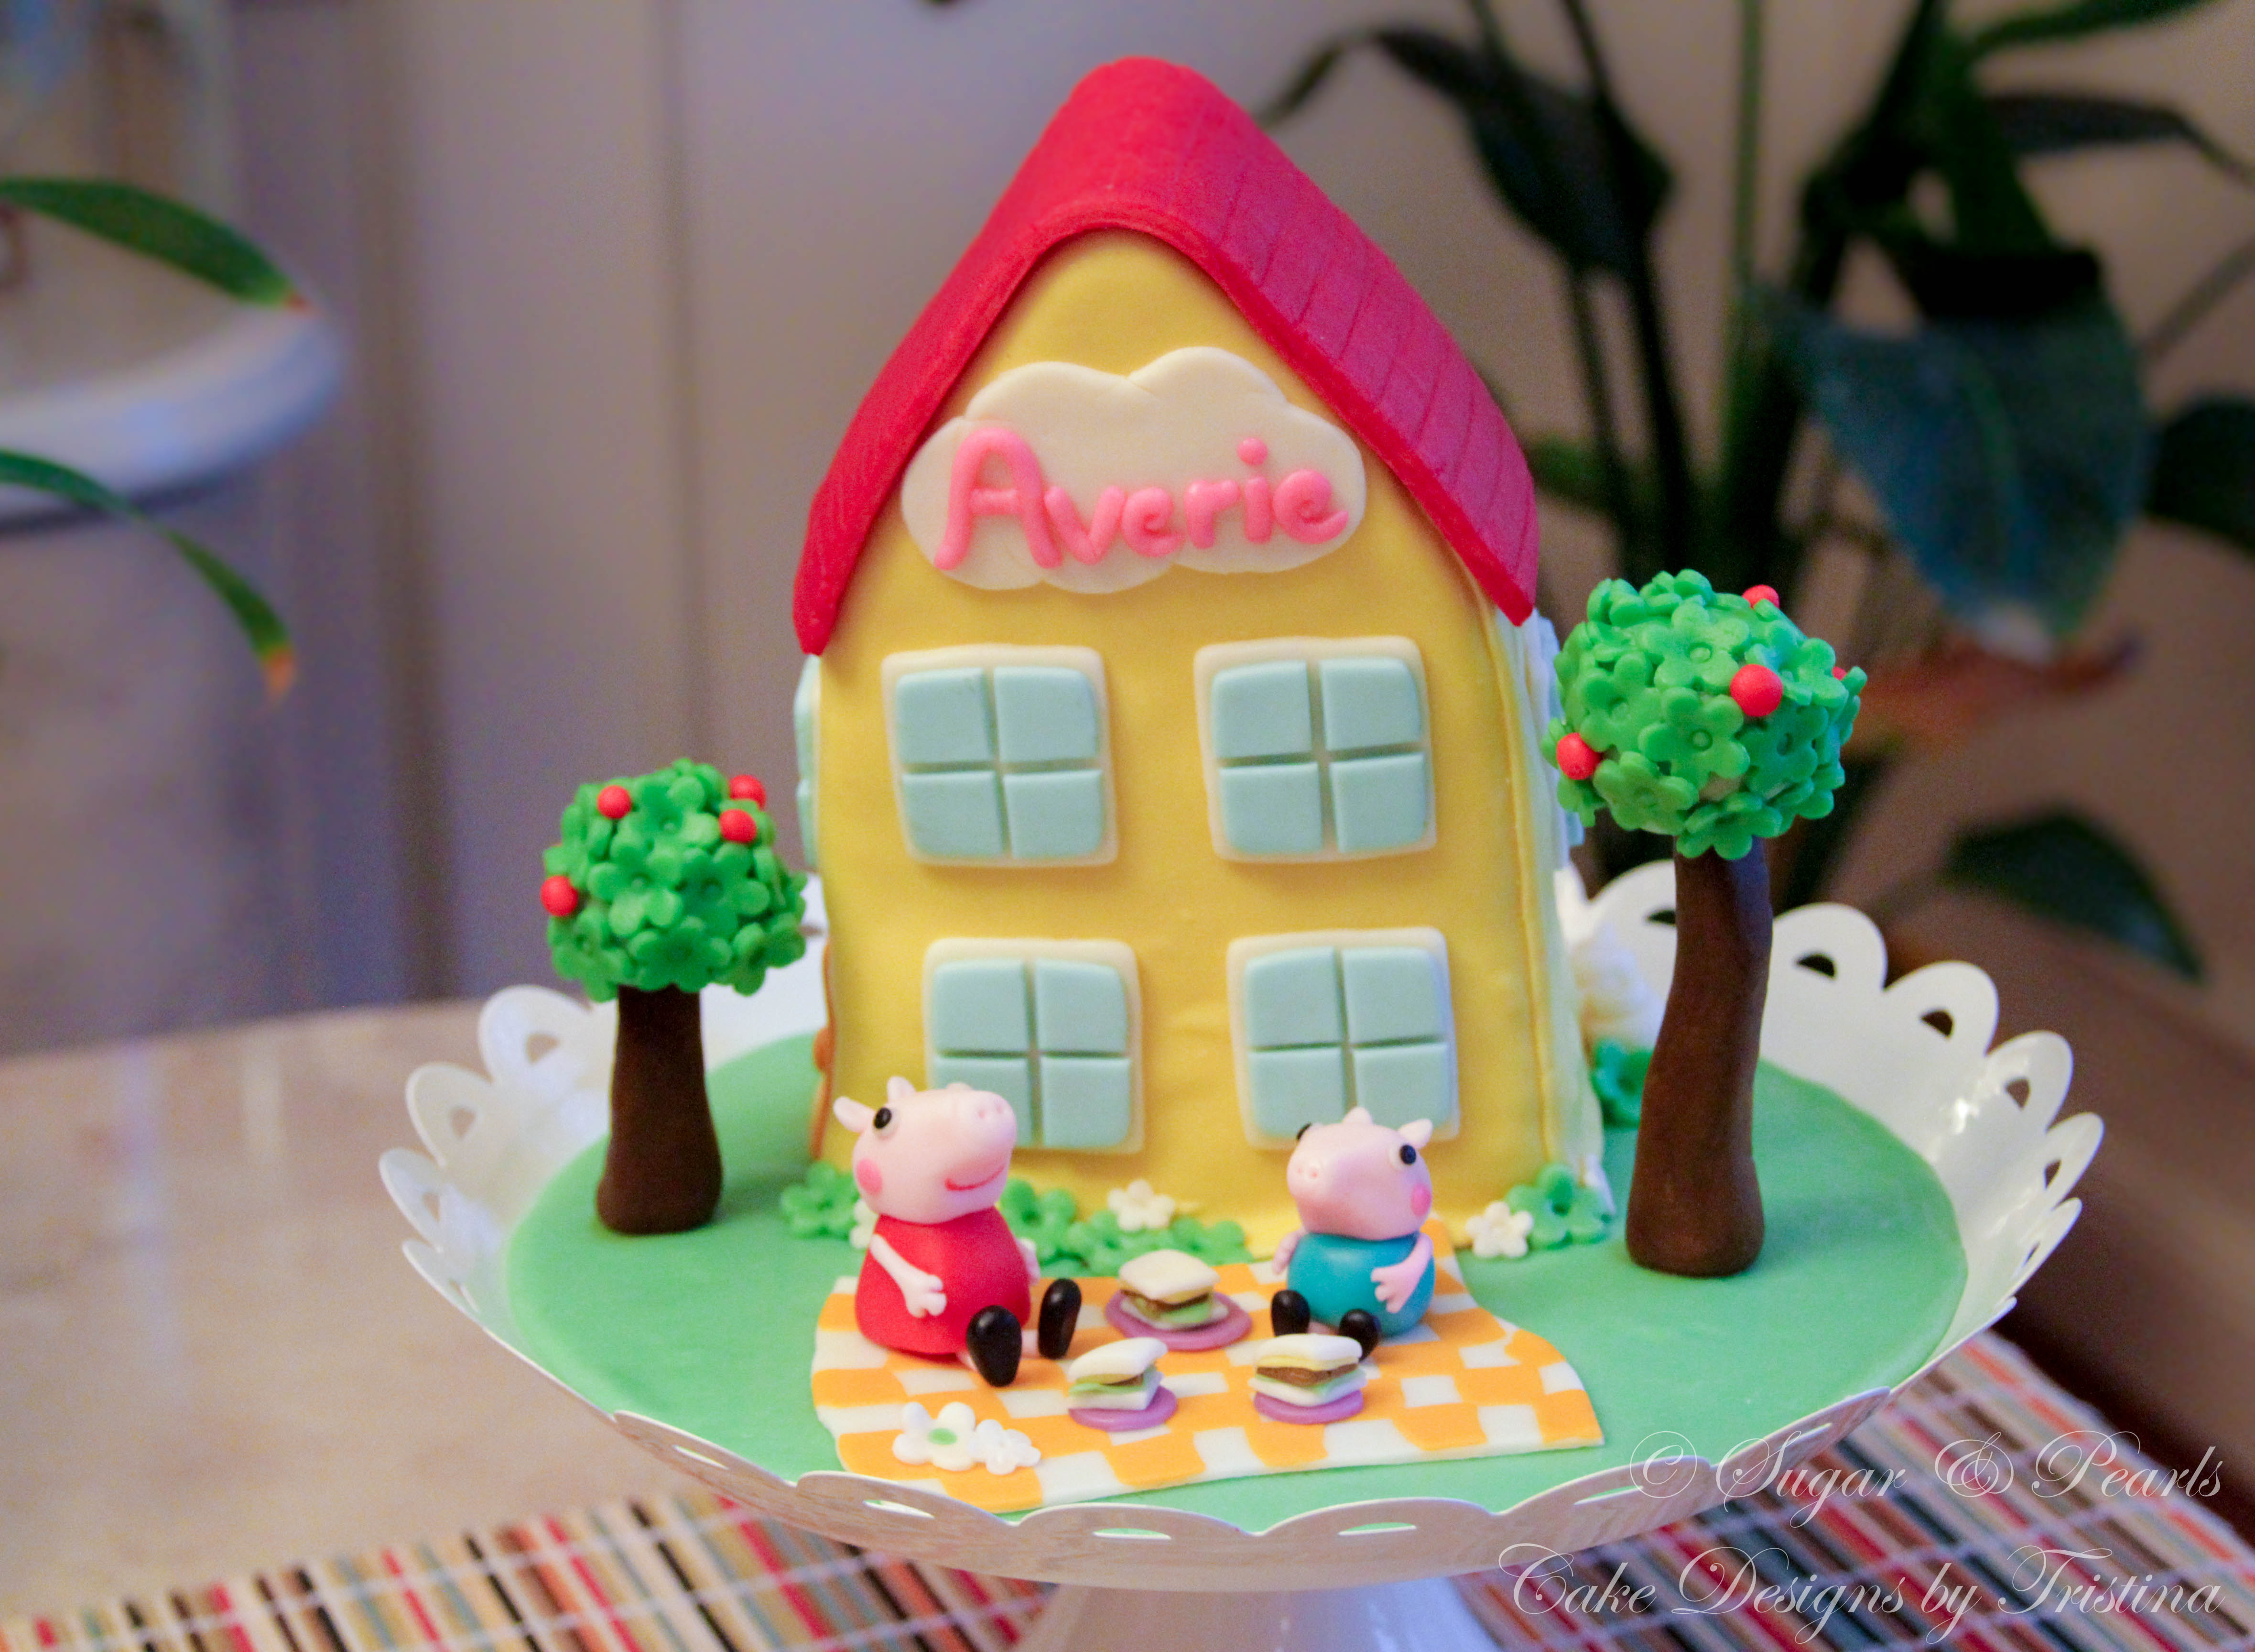 A & D cakes - ❤️simple home design cake❤️ ❤️butter cake... | Facebook